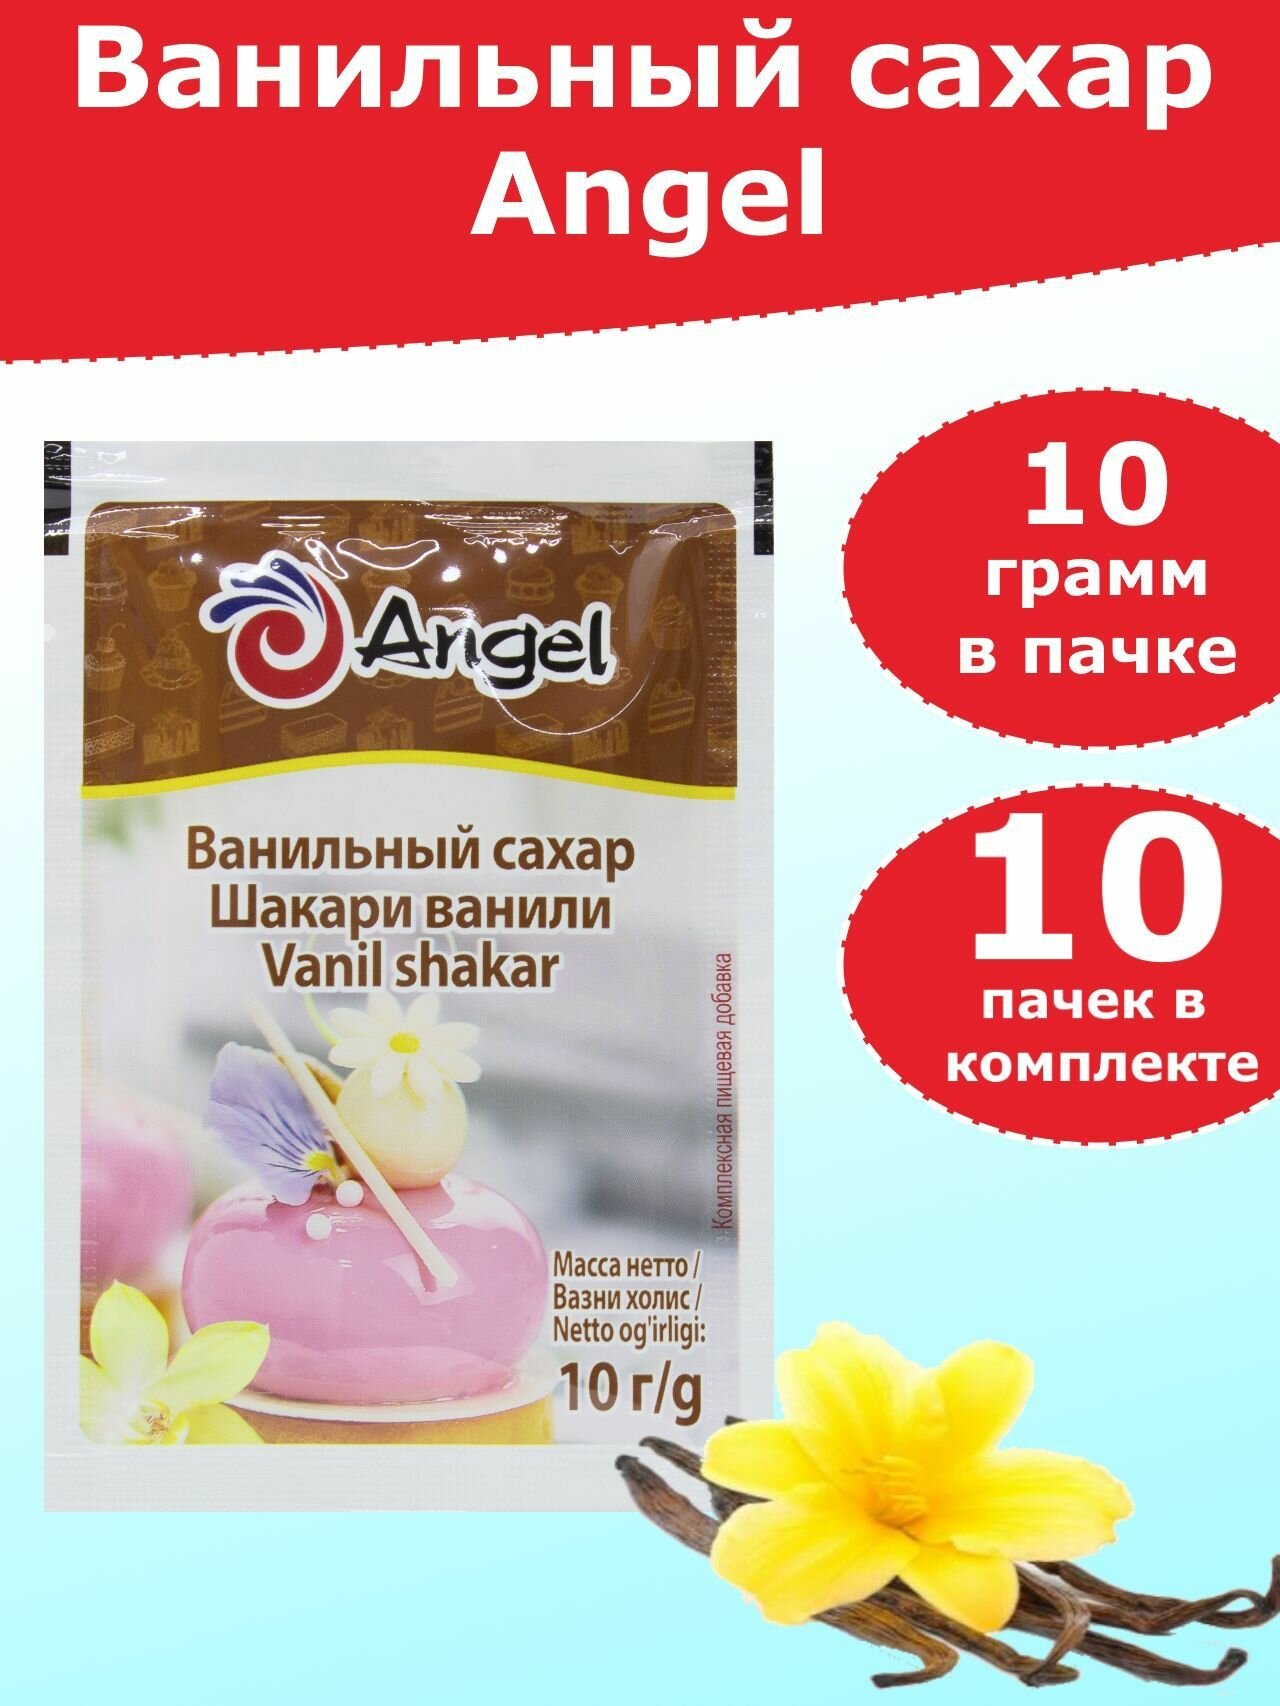 Ванильный сахар Angel, 10 грамм - 10 пачек